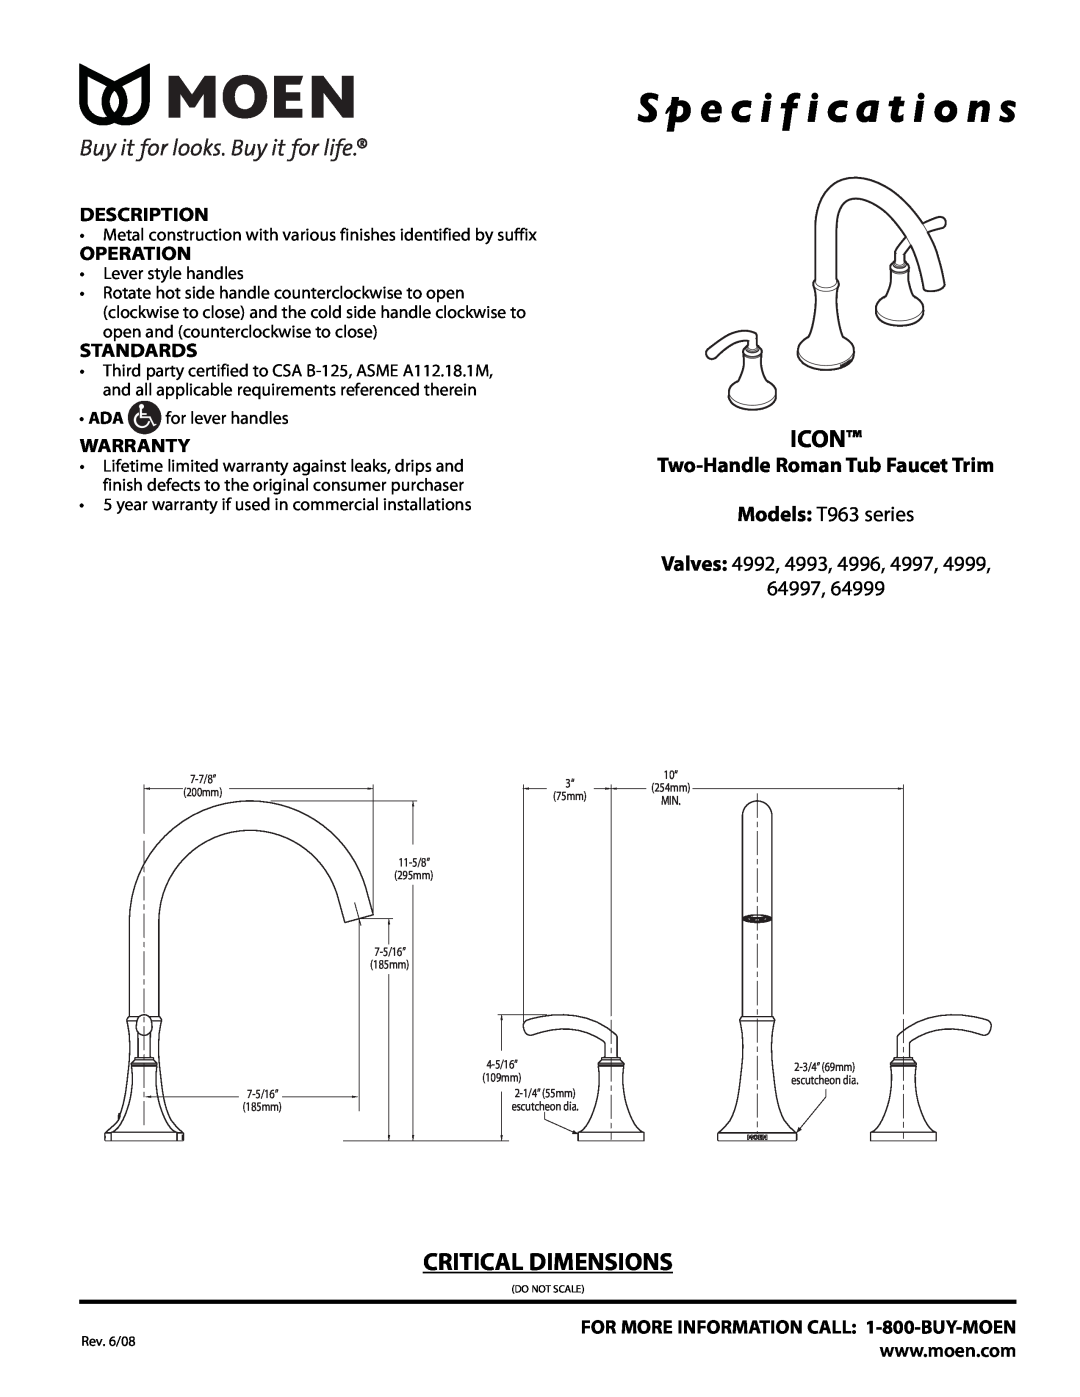 Moen 64999, T963 specifications S p e c i f i c a t i o n s, Icon, Critical Dimensions, Two-Handle Roman Tub Faucet Trim 